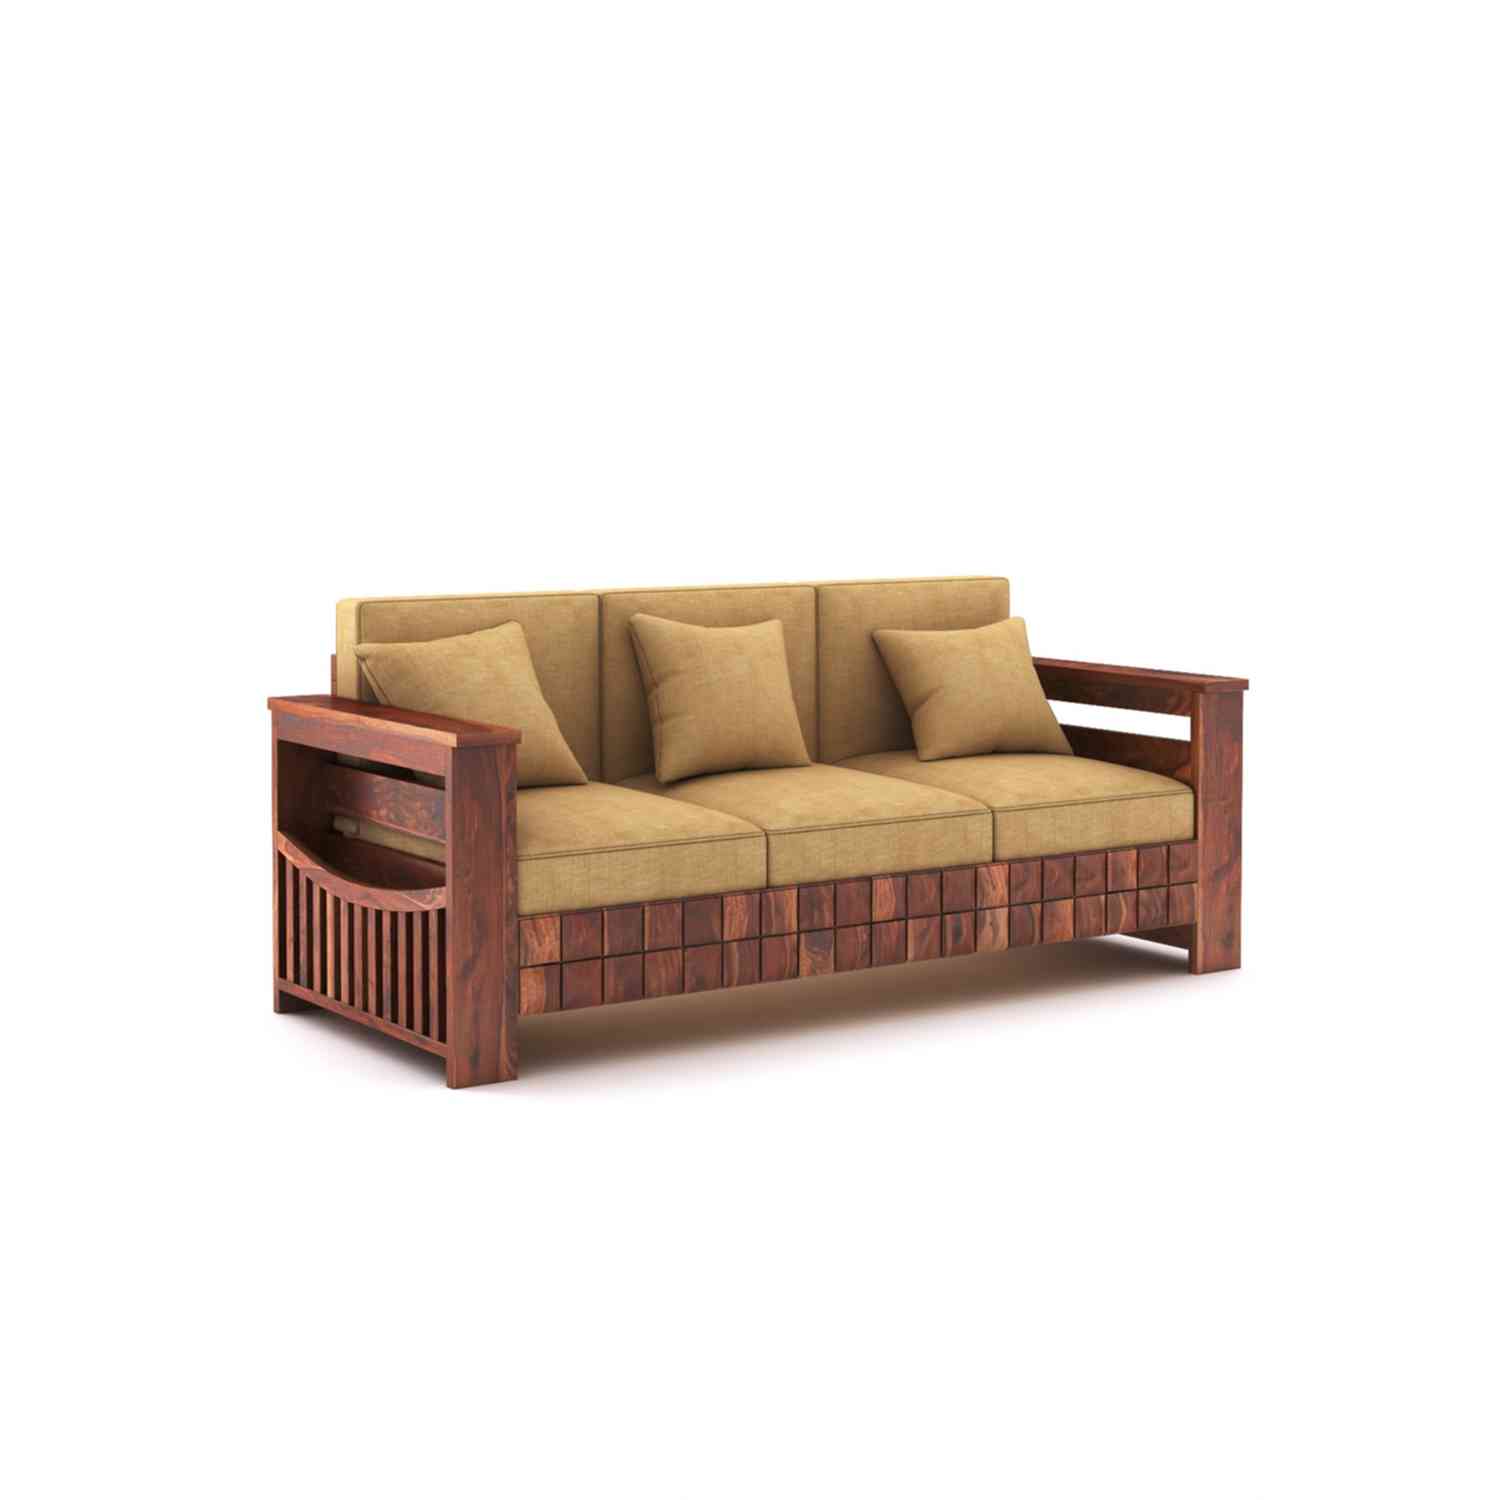 Sofia Solid Sheesham Wood 5 Seater Sofa Set (Natural Finish, 3+2)